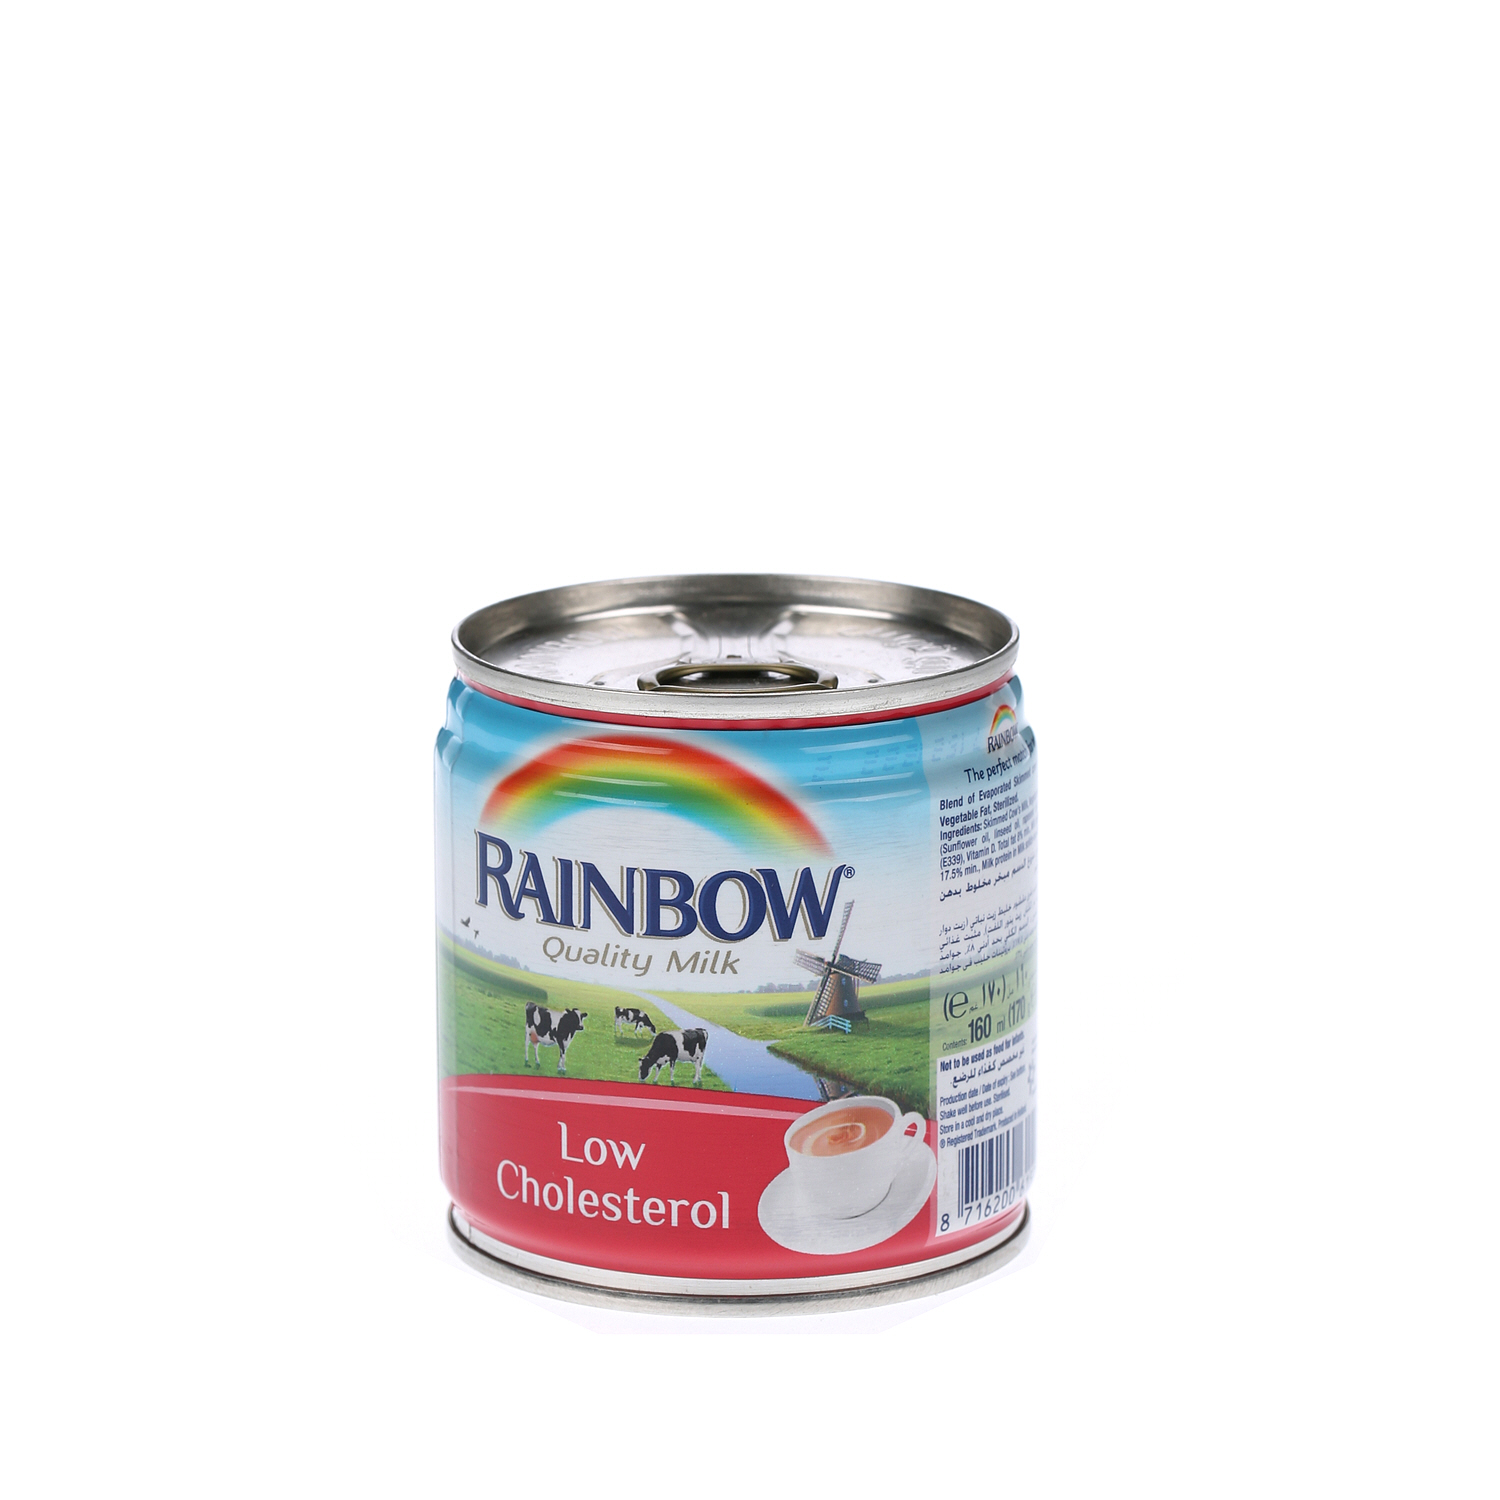 Rainbow Evaporated Milk Low Cholesterol 160g